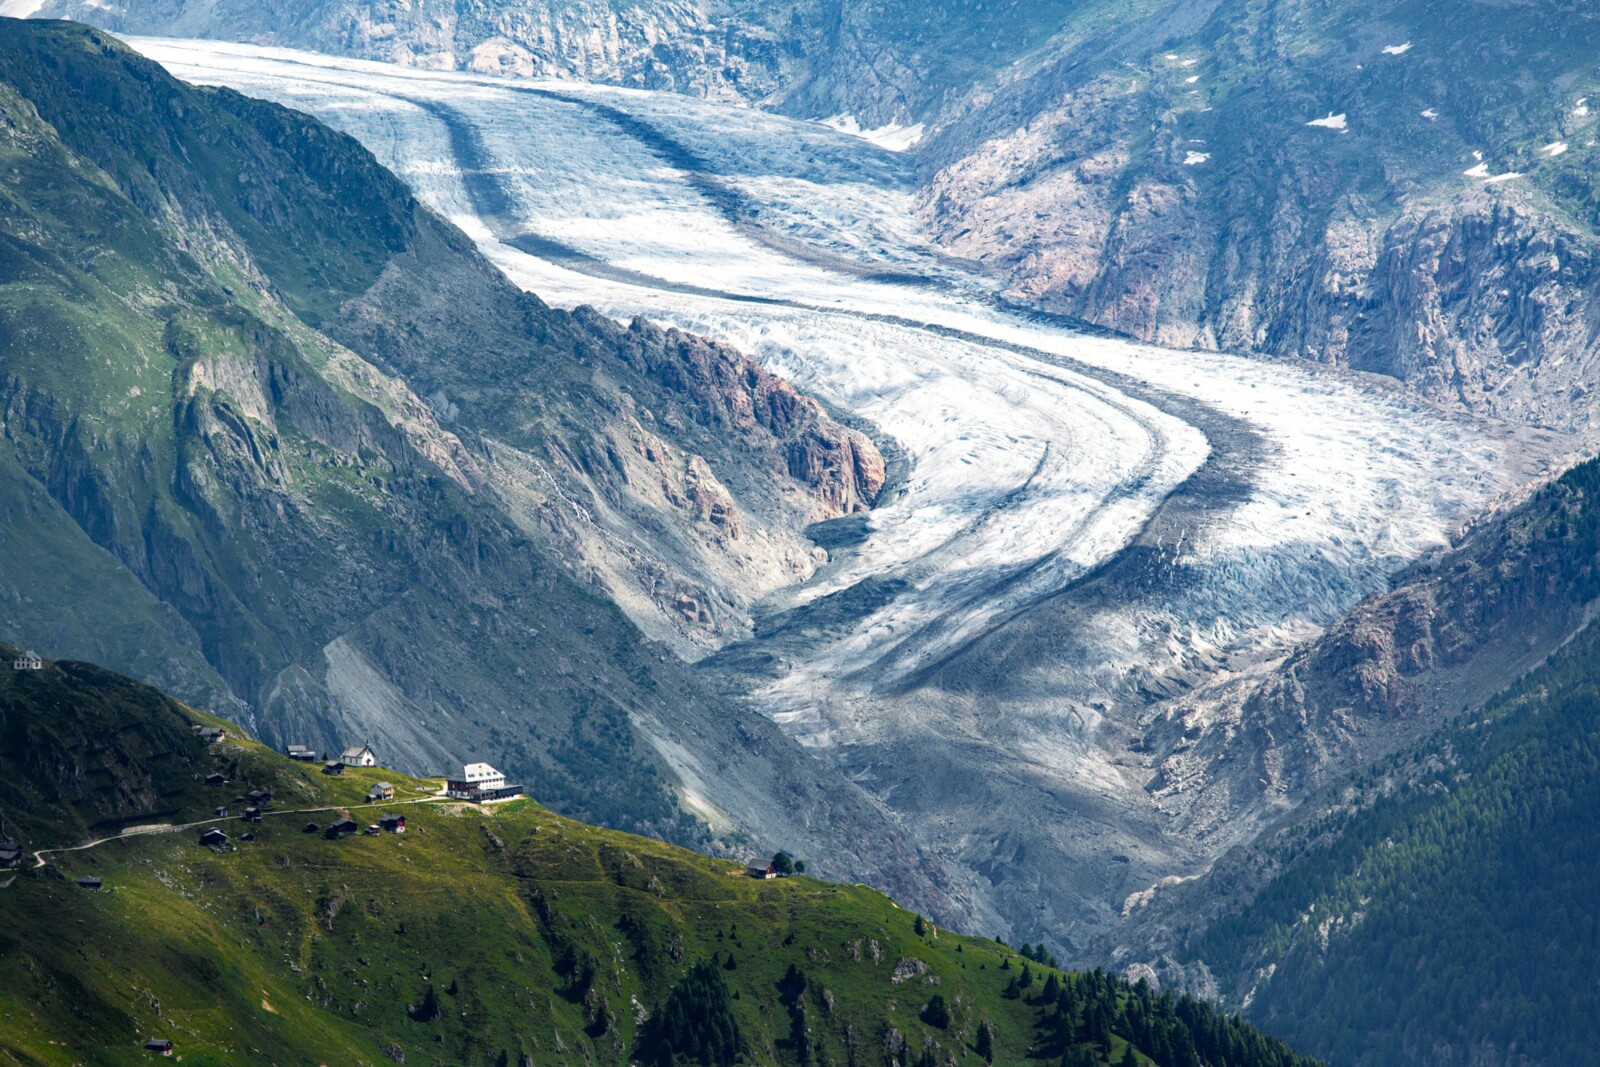 Swiss Alps Jungfrau-Aletsch